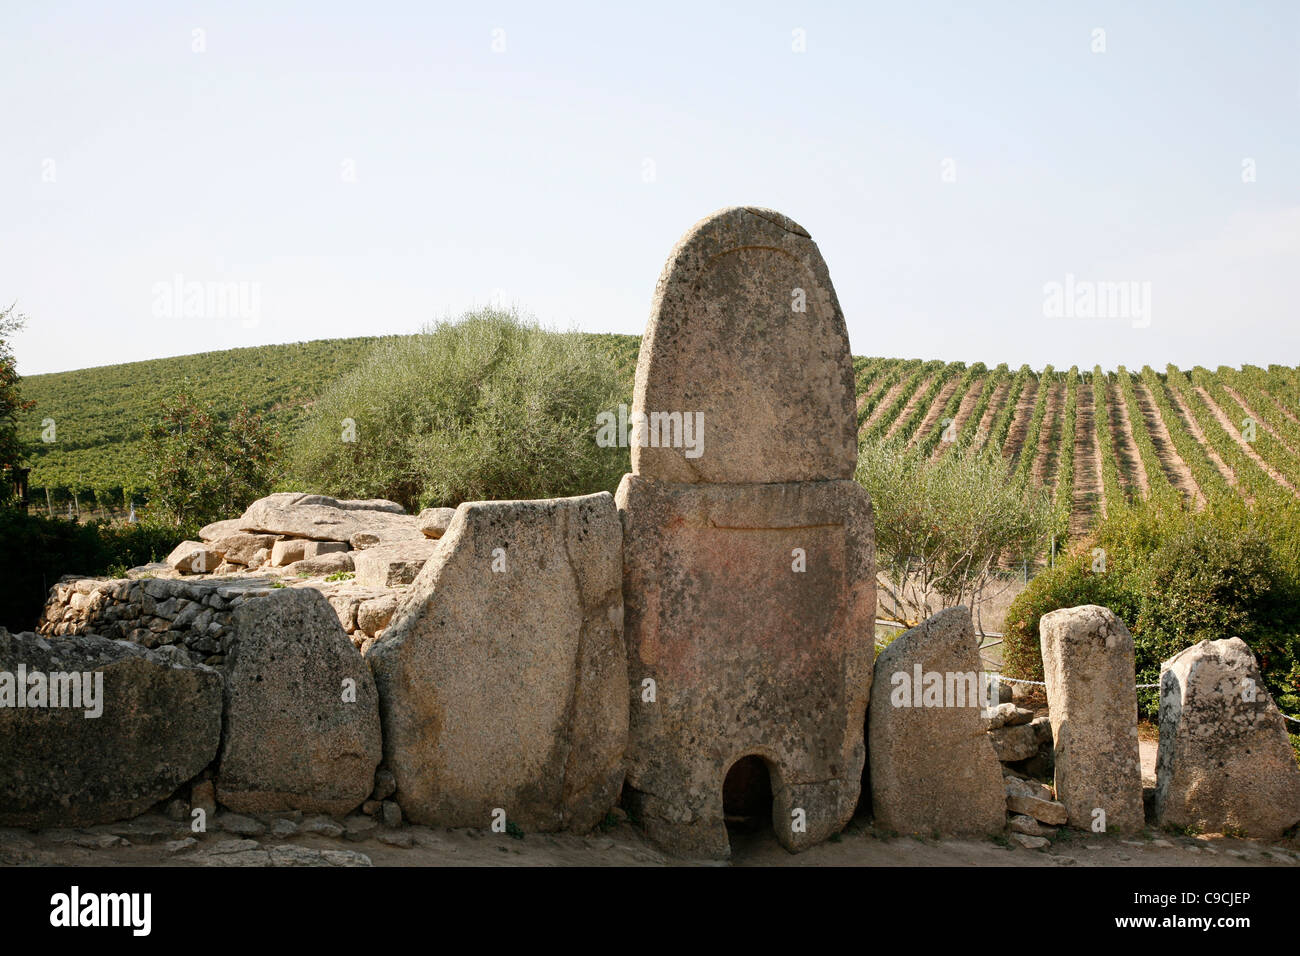 The Giants Tomb of Coddu Vecchiu, Arzachena, Sardinia, Italy. Stock Photo